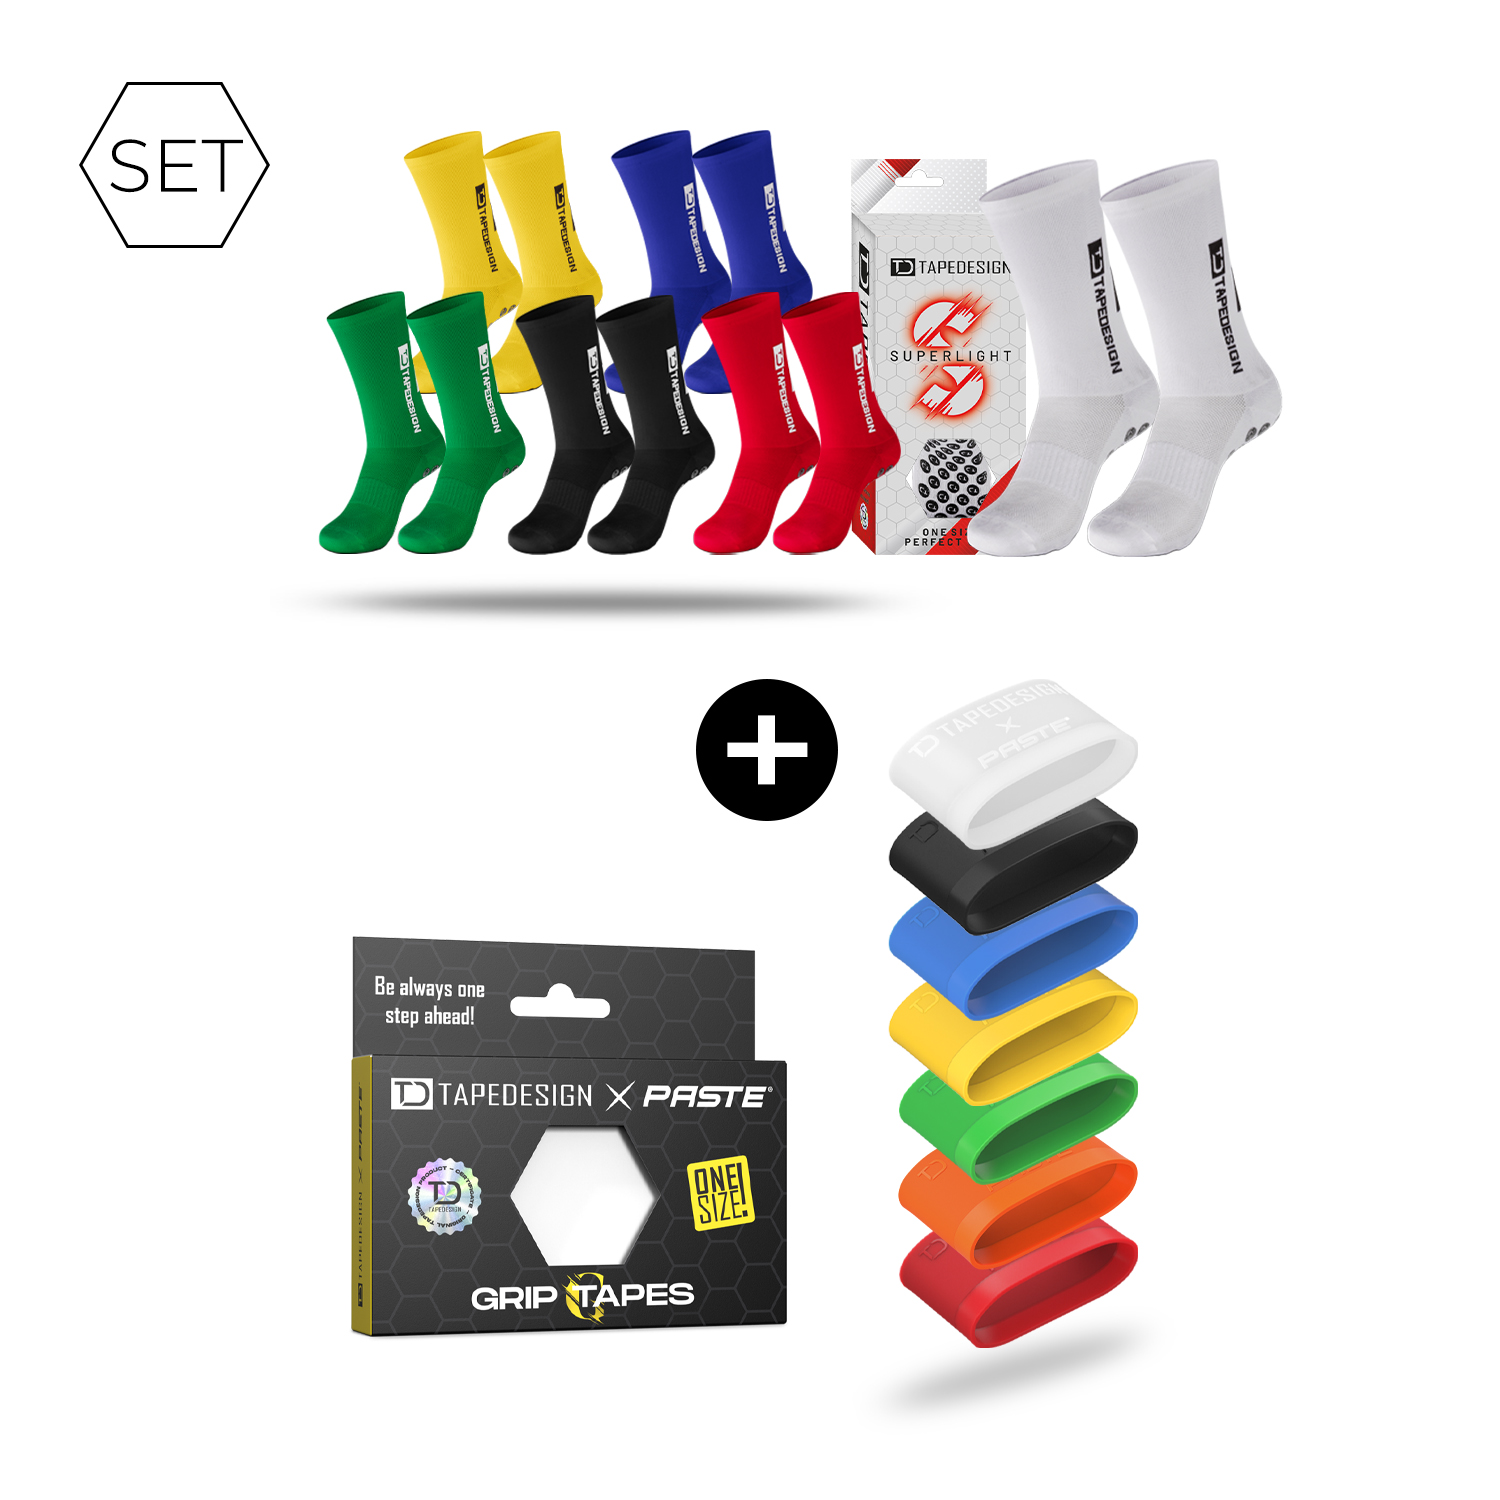 Sleek Strap Design Socks with Comfort Grip